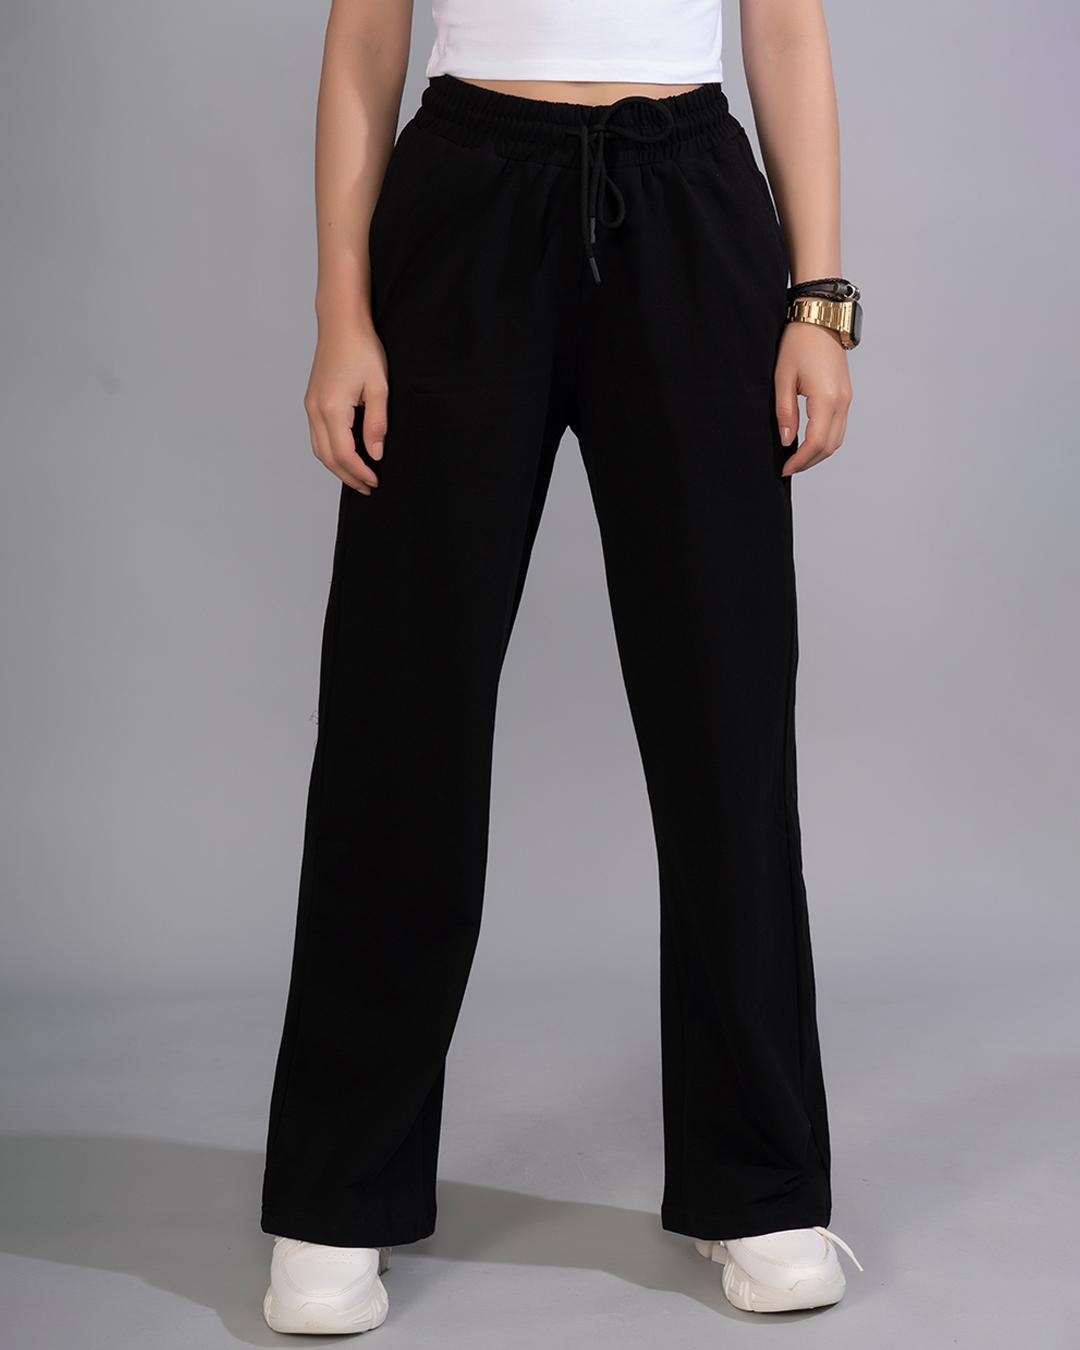 Buy Women's Black Relaxed Fit Cargo Pants Online at Bewakoof